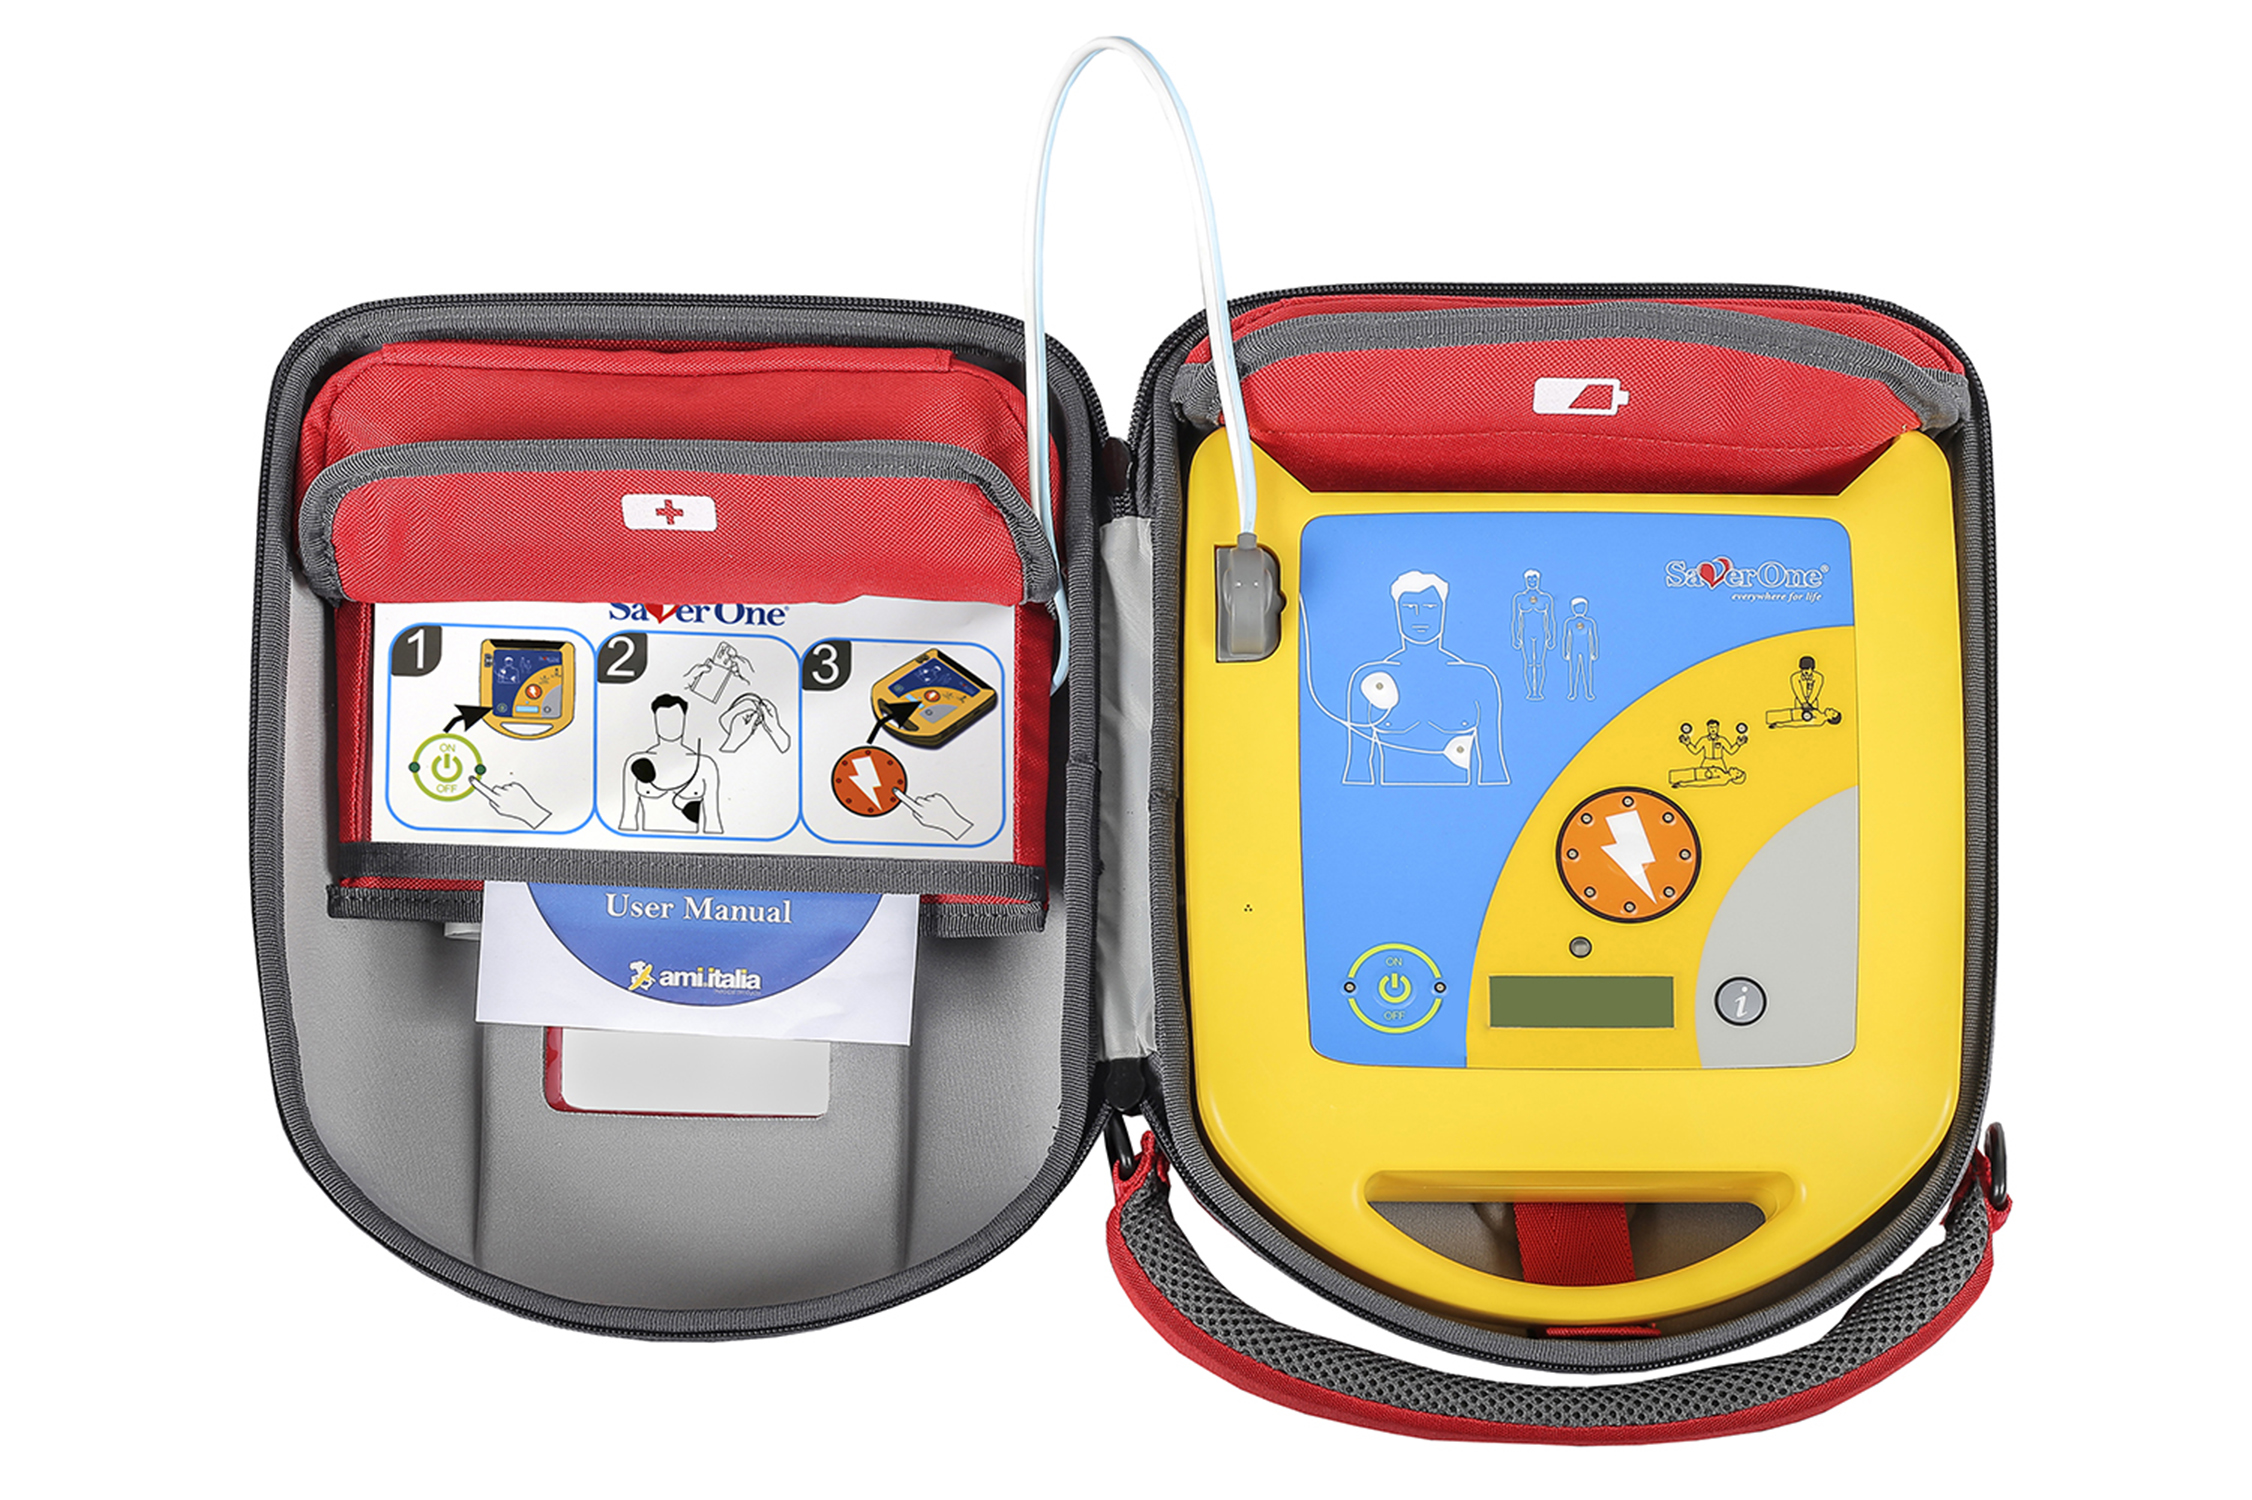 Saver One AED Defibrillator / Halbautomat